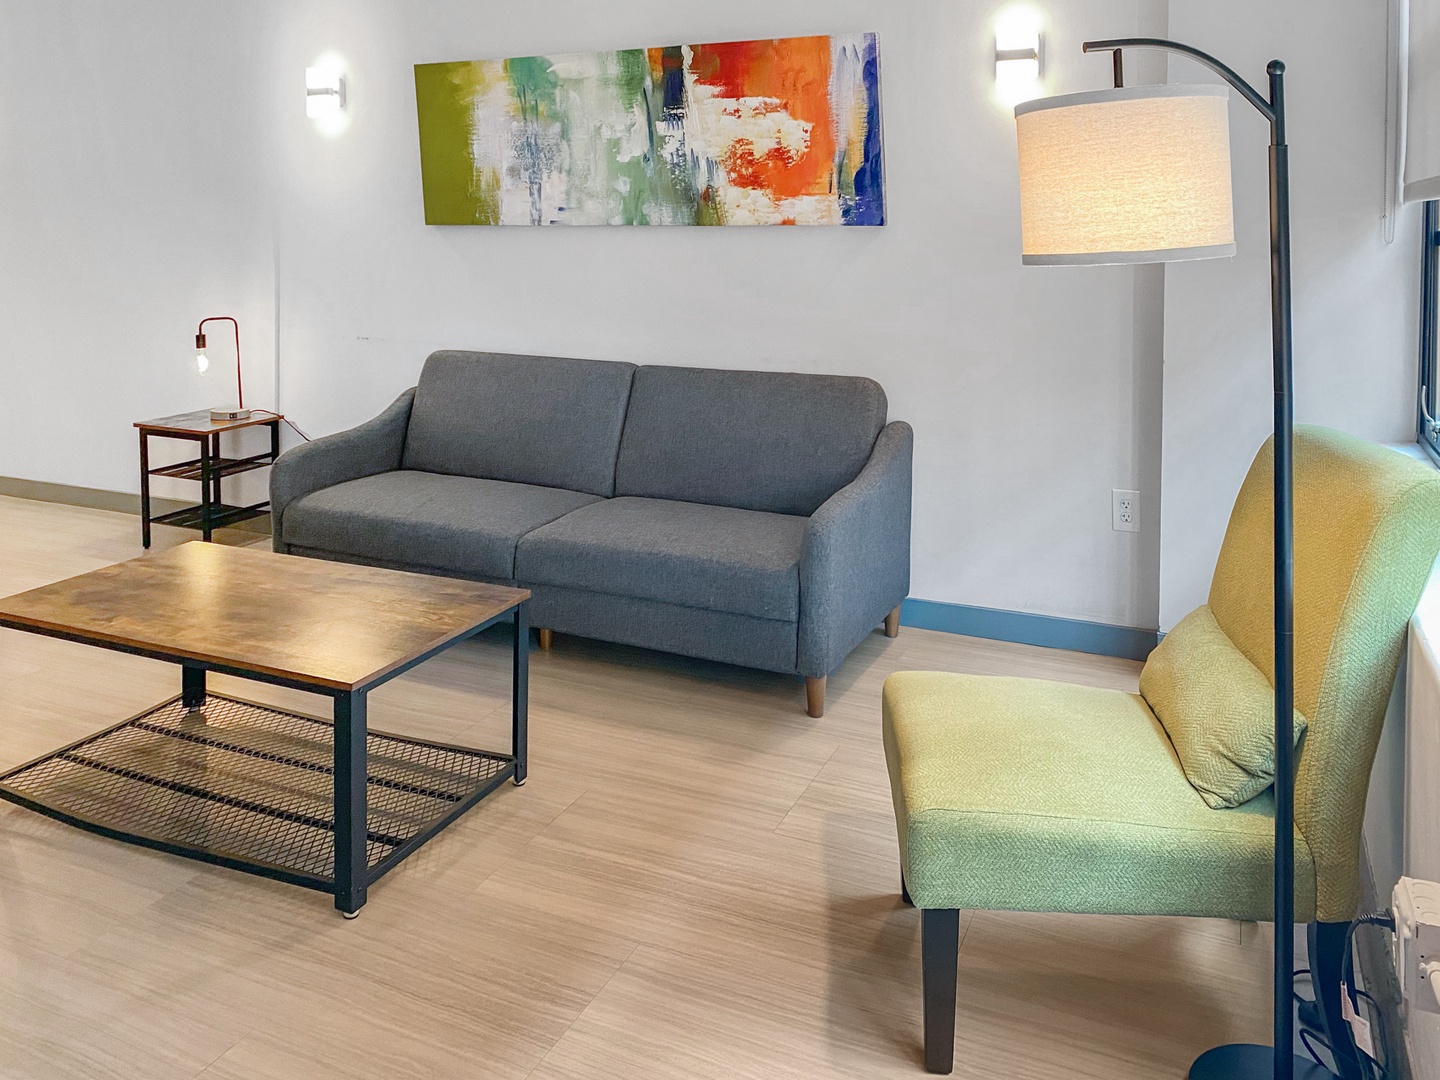 accommodation with modern amenities in Cincinnati